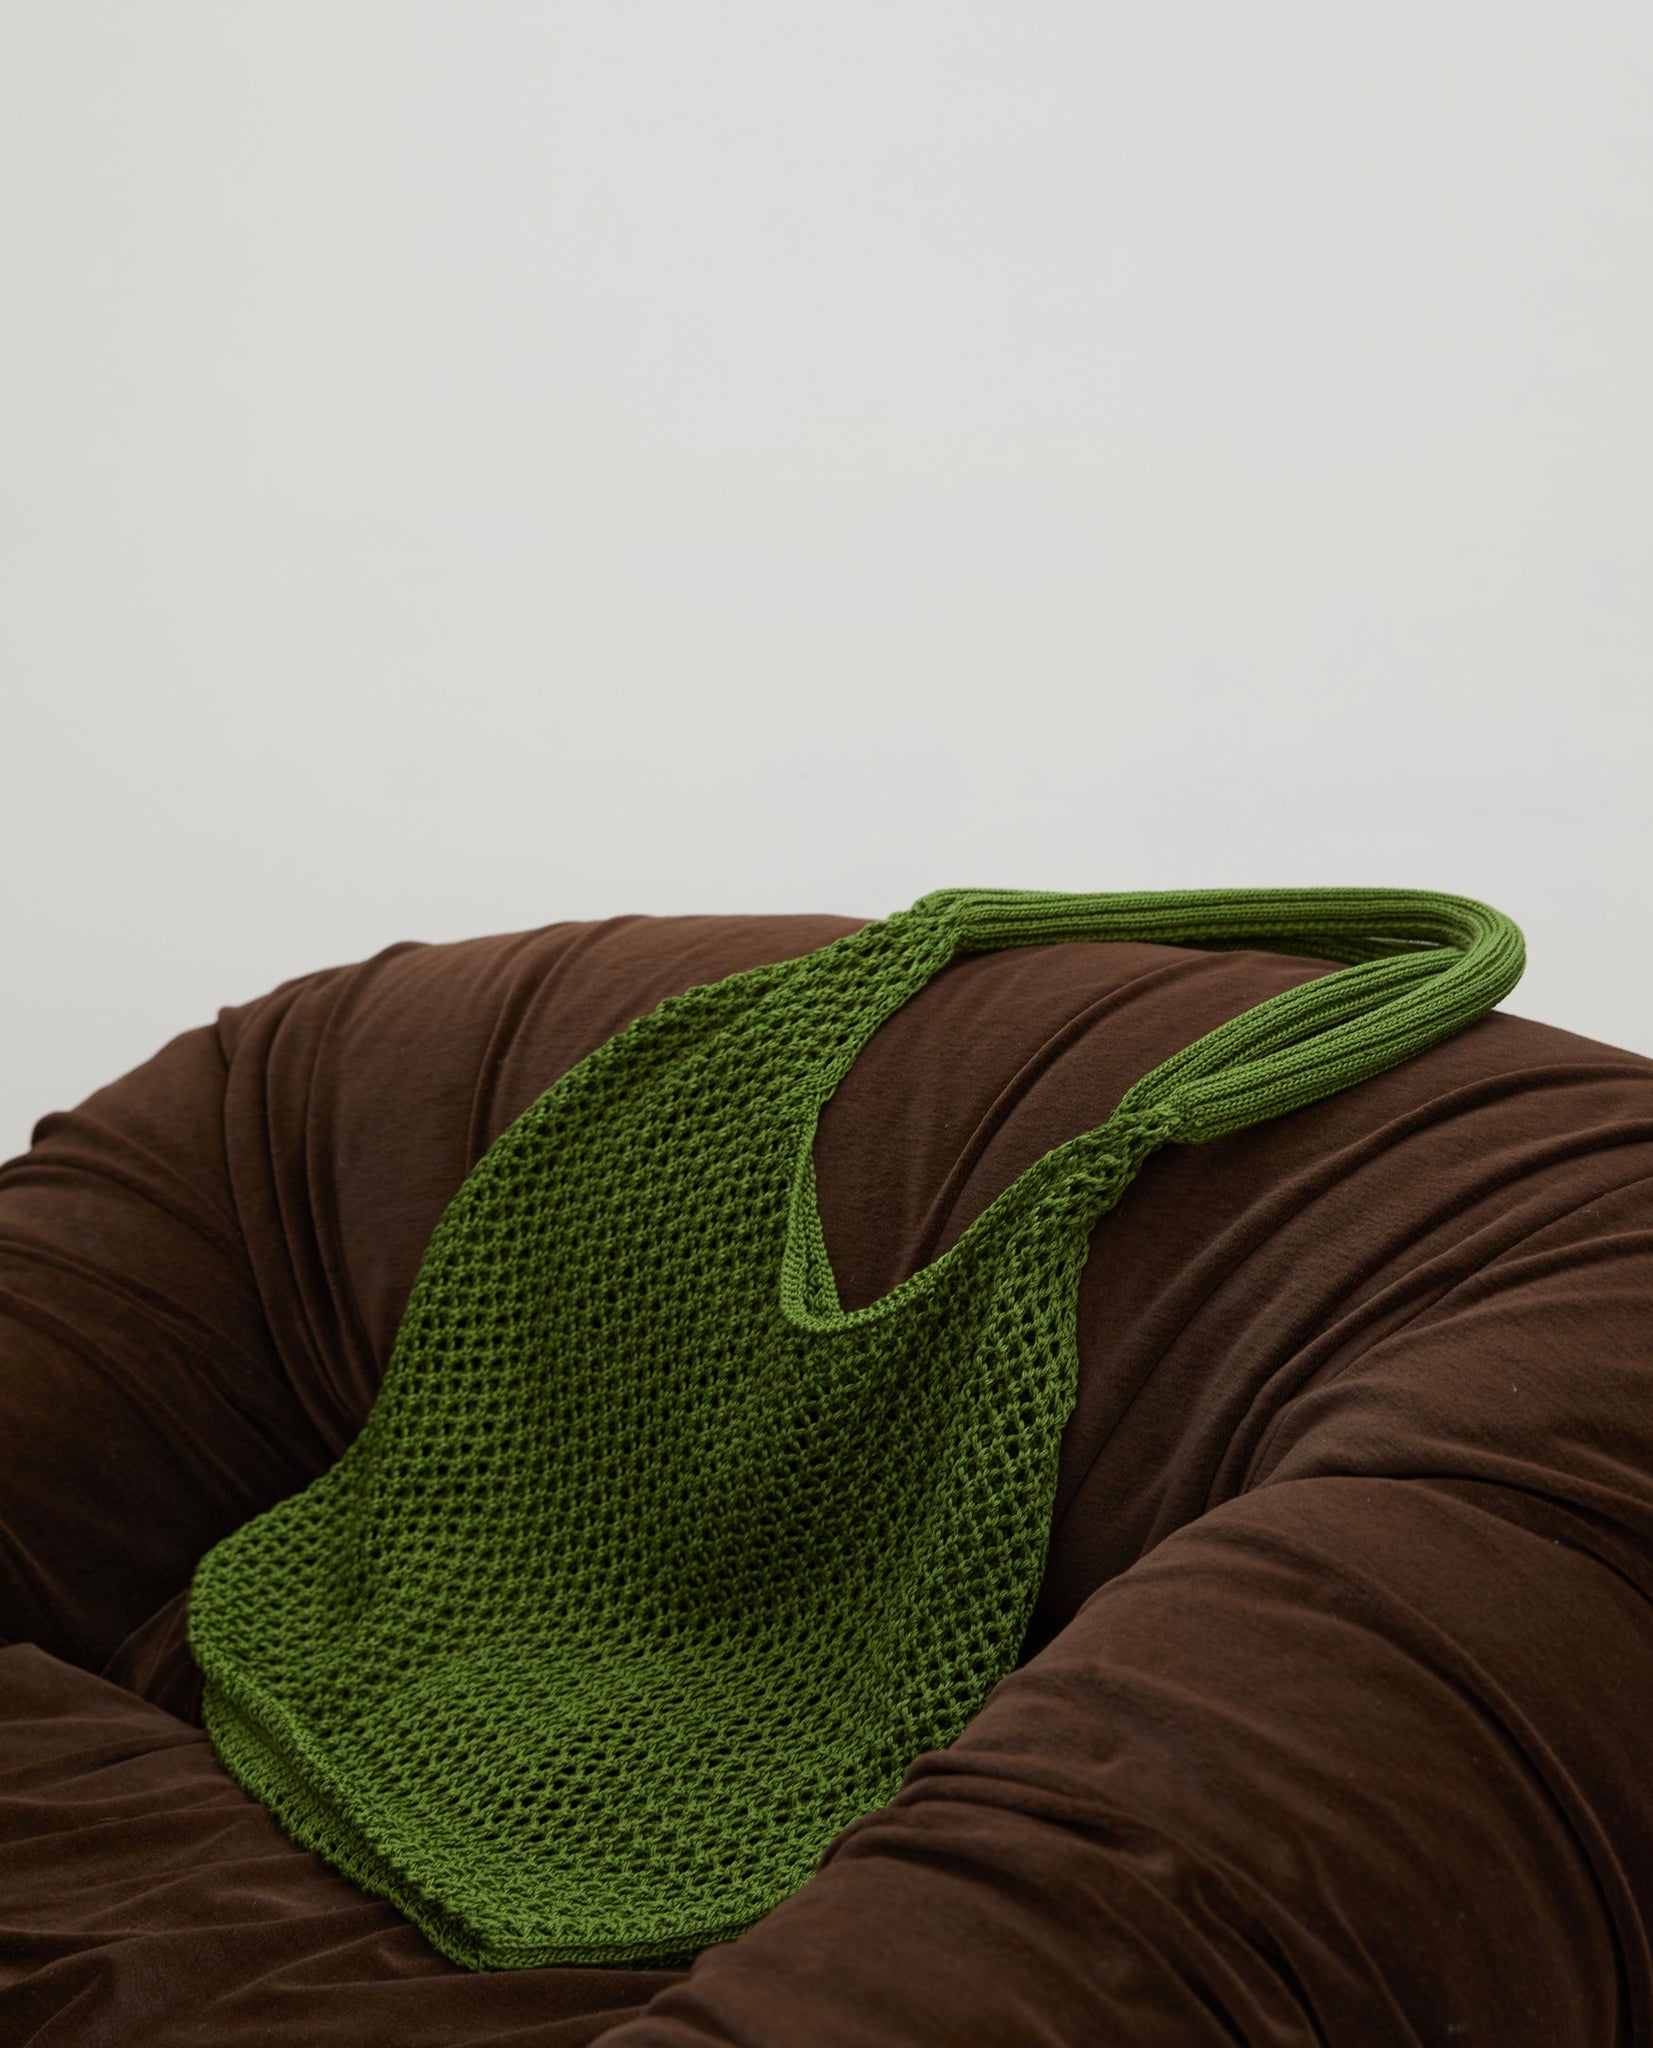 Bo bag in fern green by Róhe